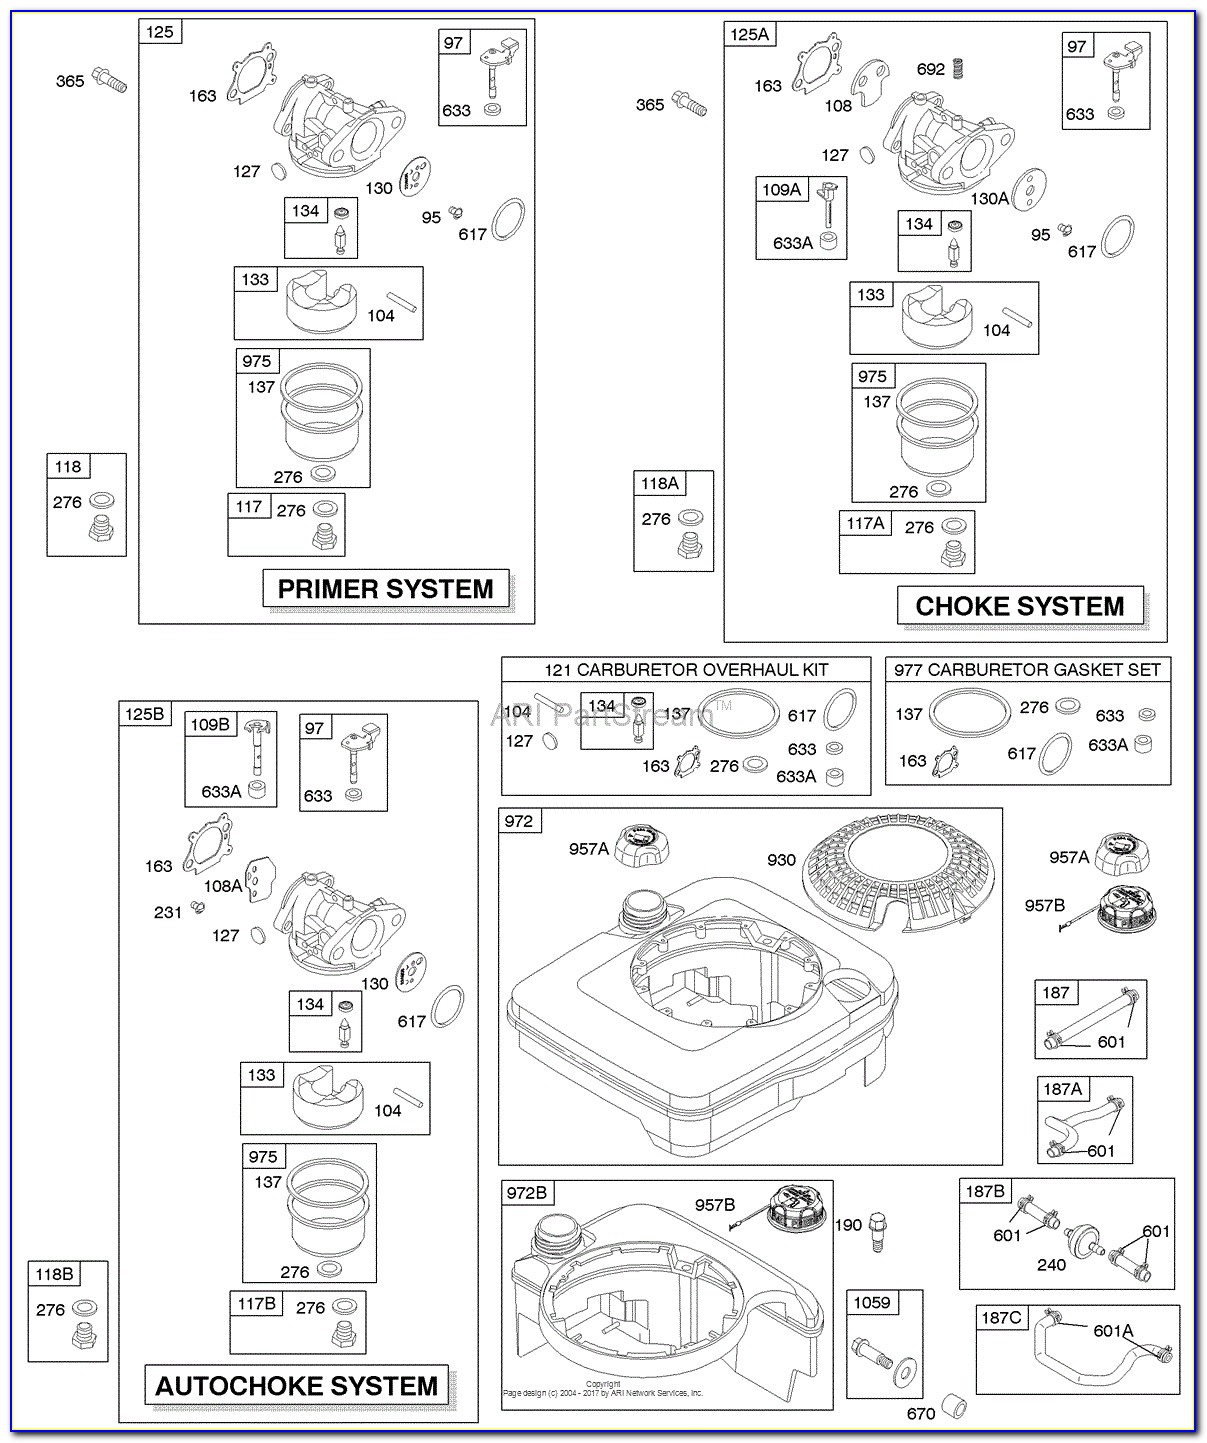 10 Hp Briggs And Stratton Carburetor Linkage Diagram